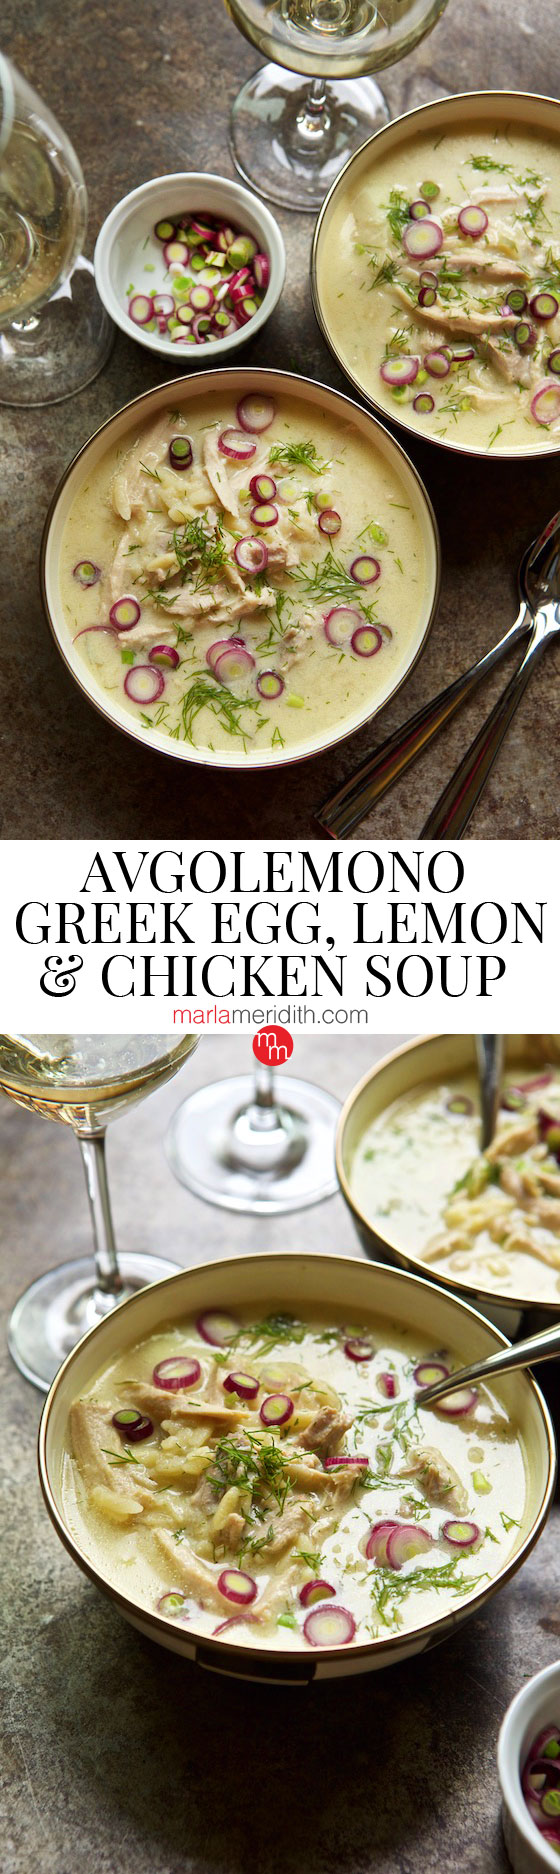 Avgolemono Soup (Greek Egg, Lemon & Chicken Soup) recipe| MarlaMeridith.com #soup #recipe #food